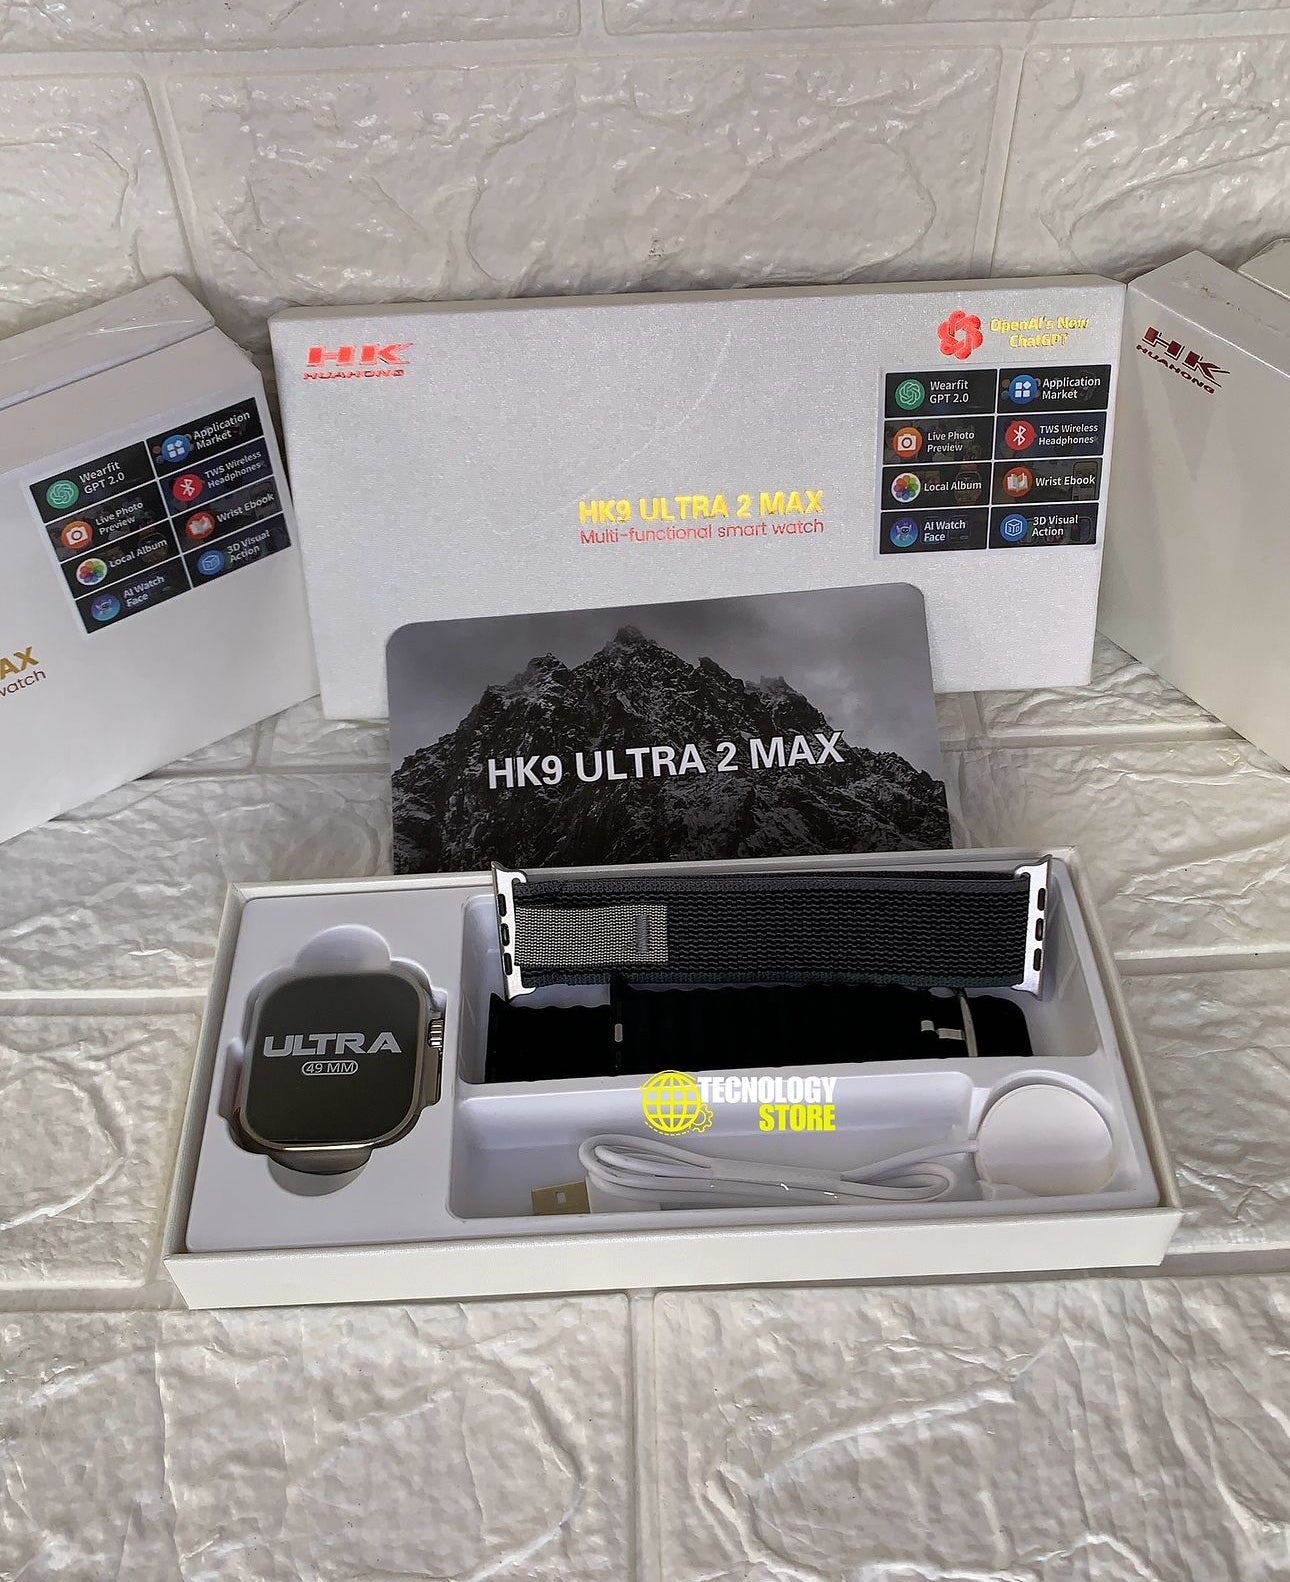 🧬2024 Ultra SmartWatch | Amoled HD Display |Chat GPT